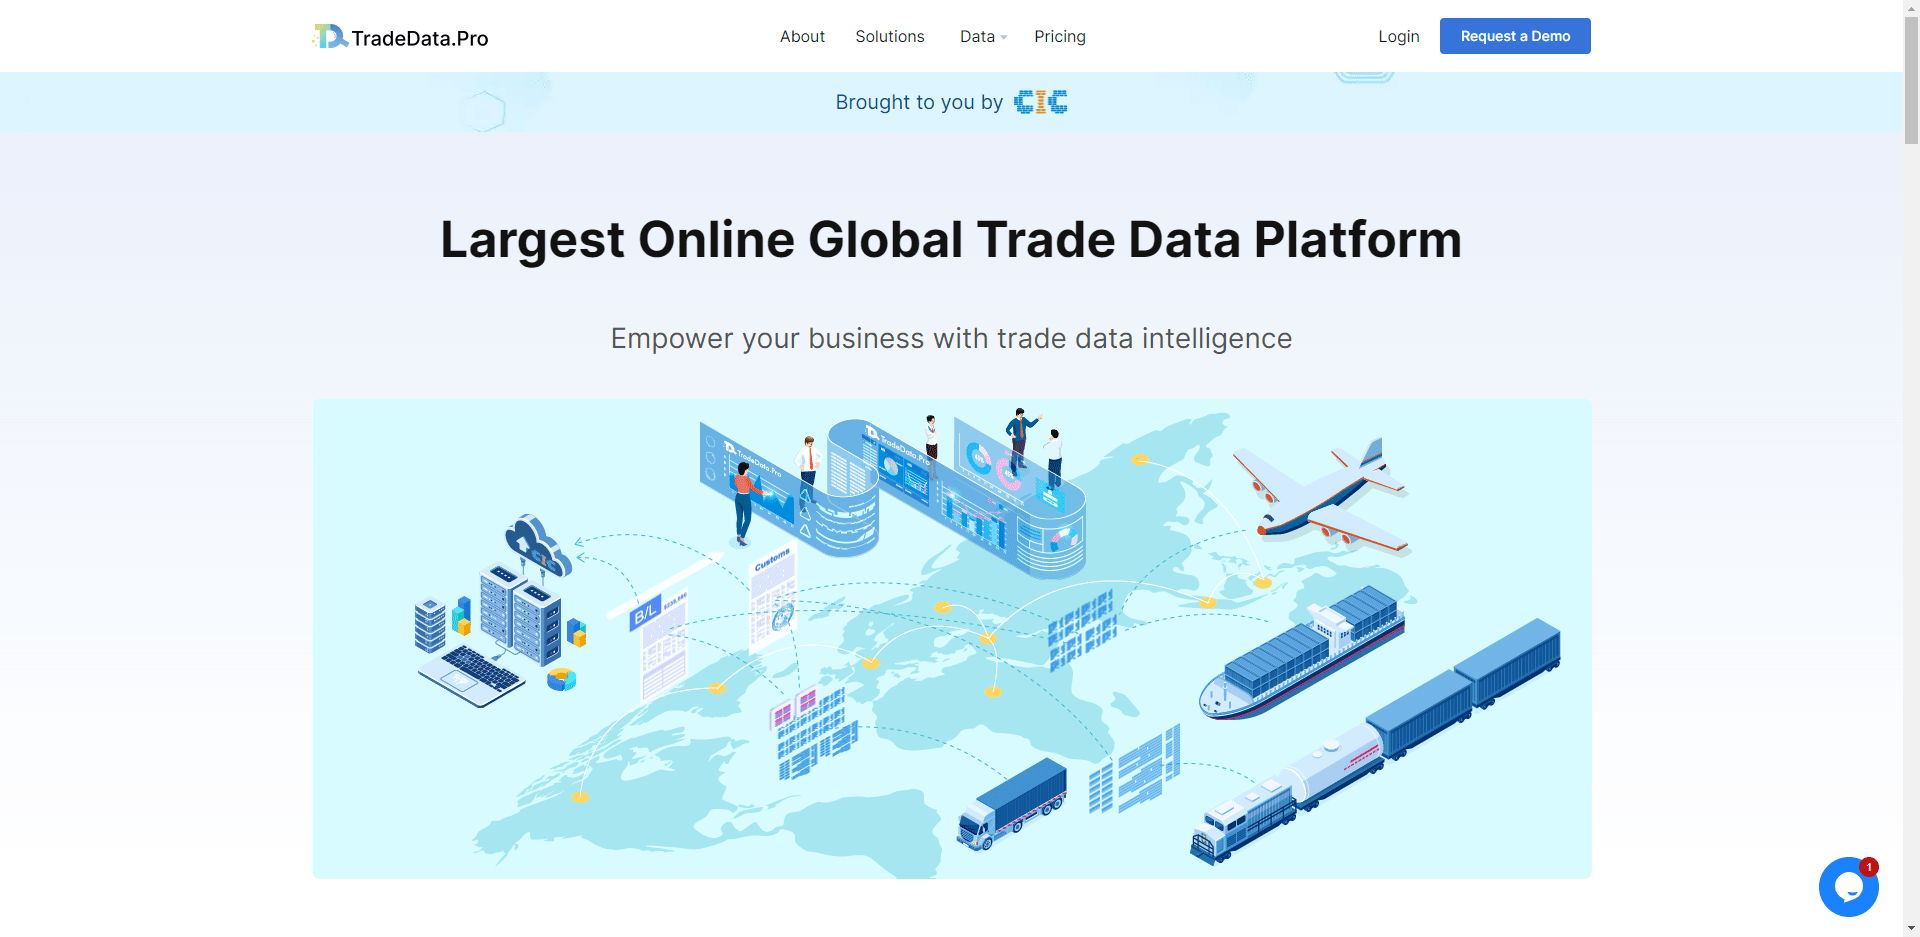 Access TradeData.Pro, the largest trade data platform